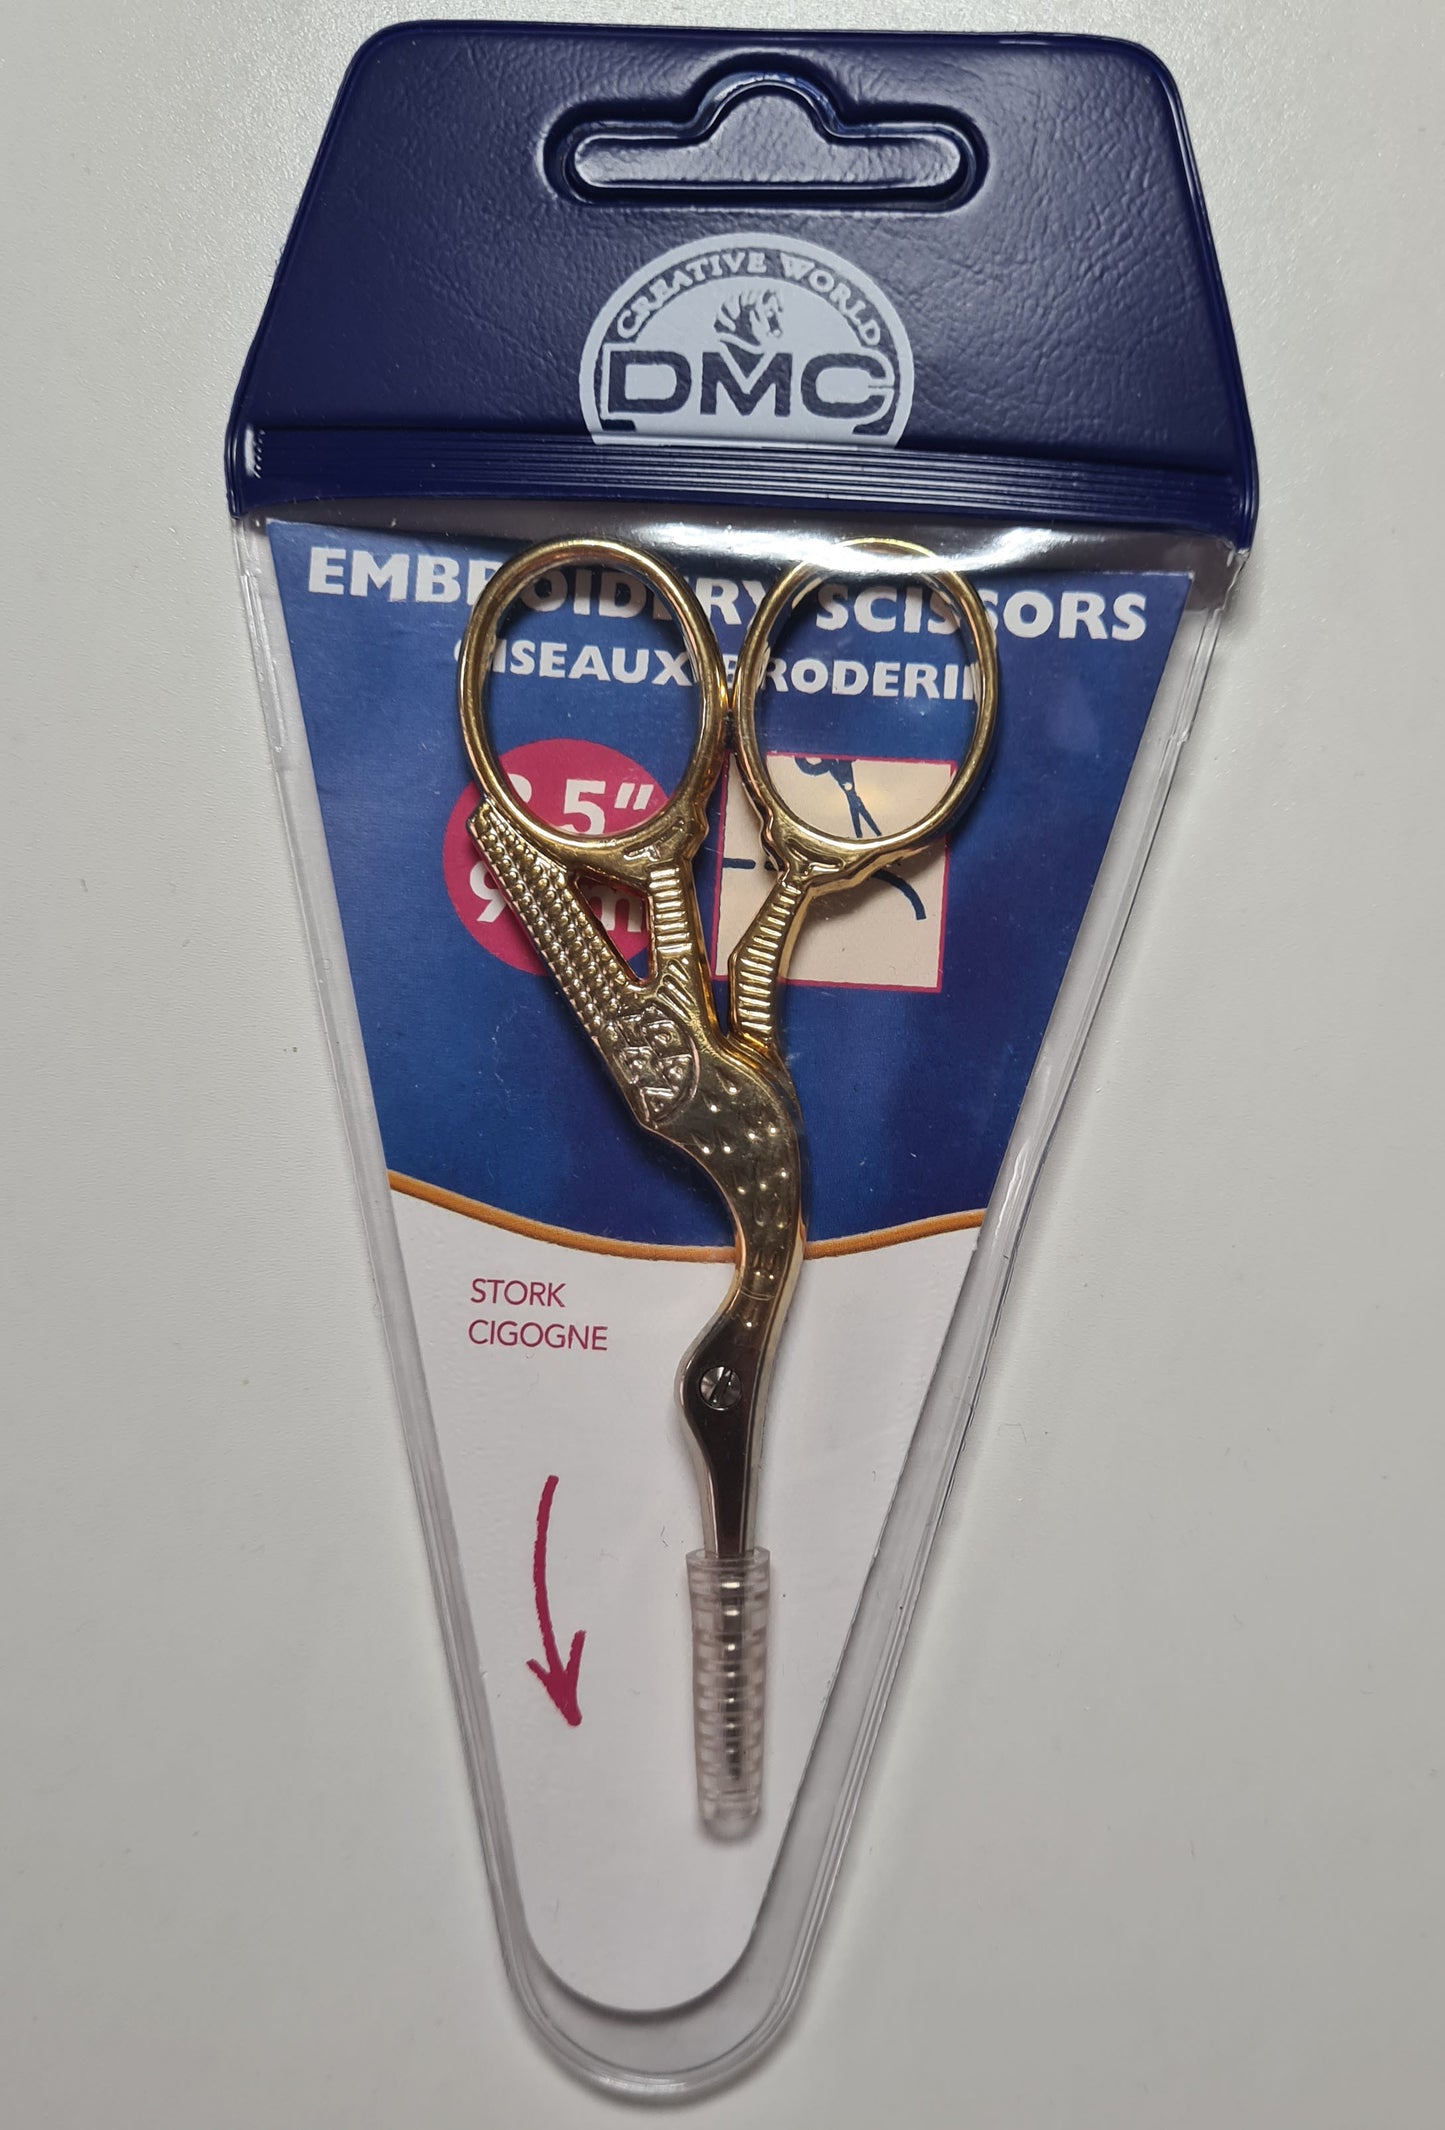 DMC Stork Scissors